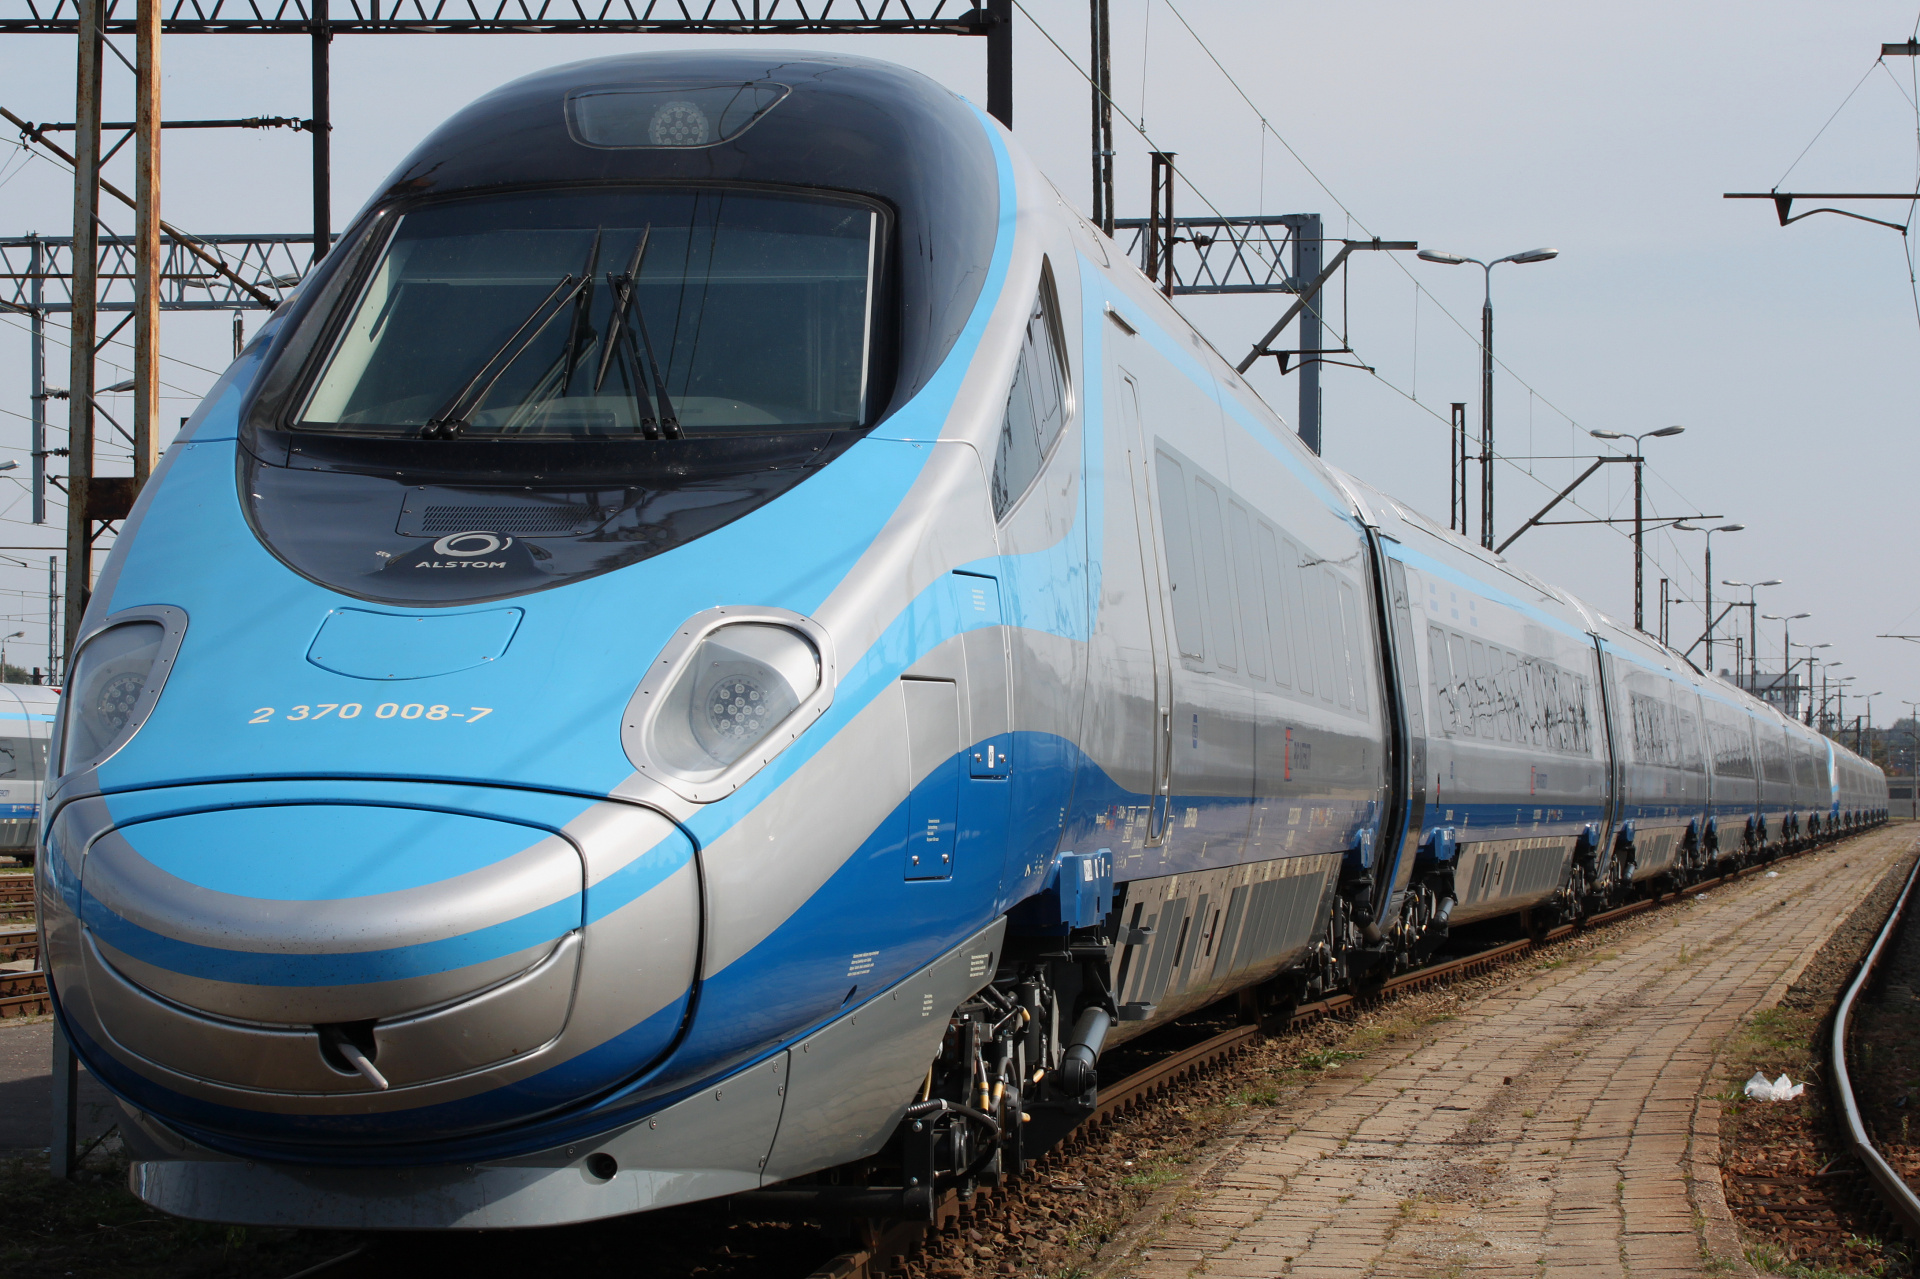 ED250-002 (Vehicles » Trains and Locomotives » Alstom ETR 610 Pendolino)